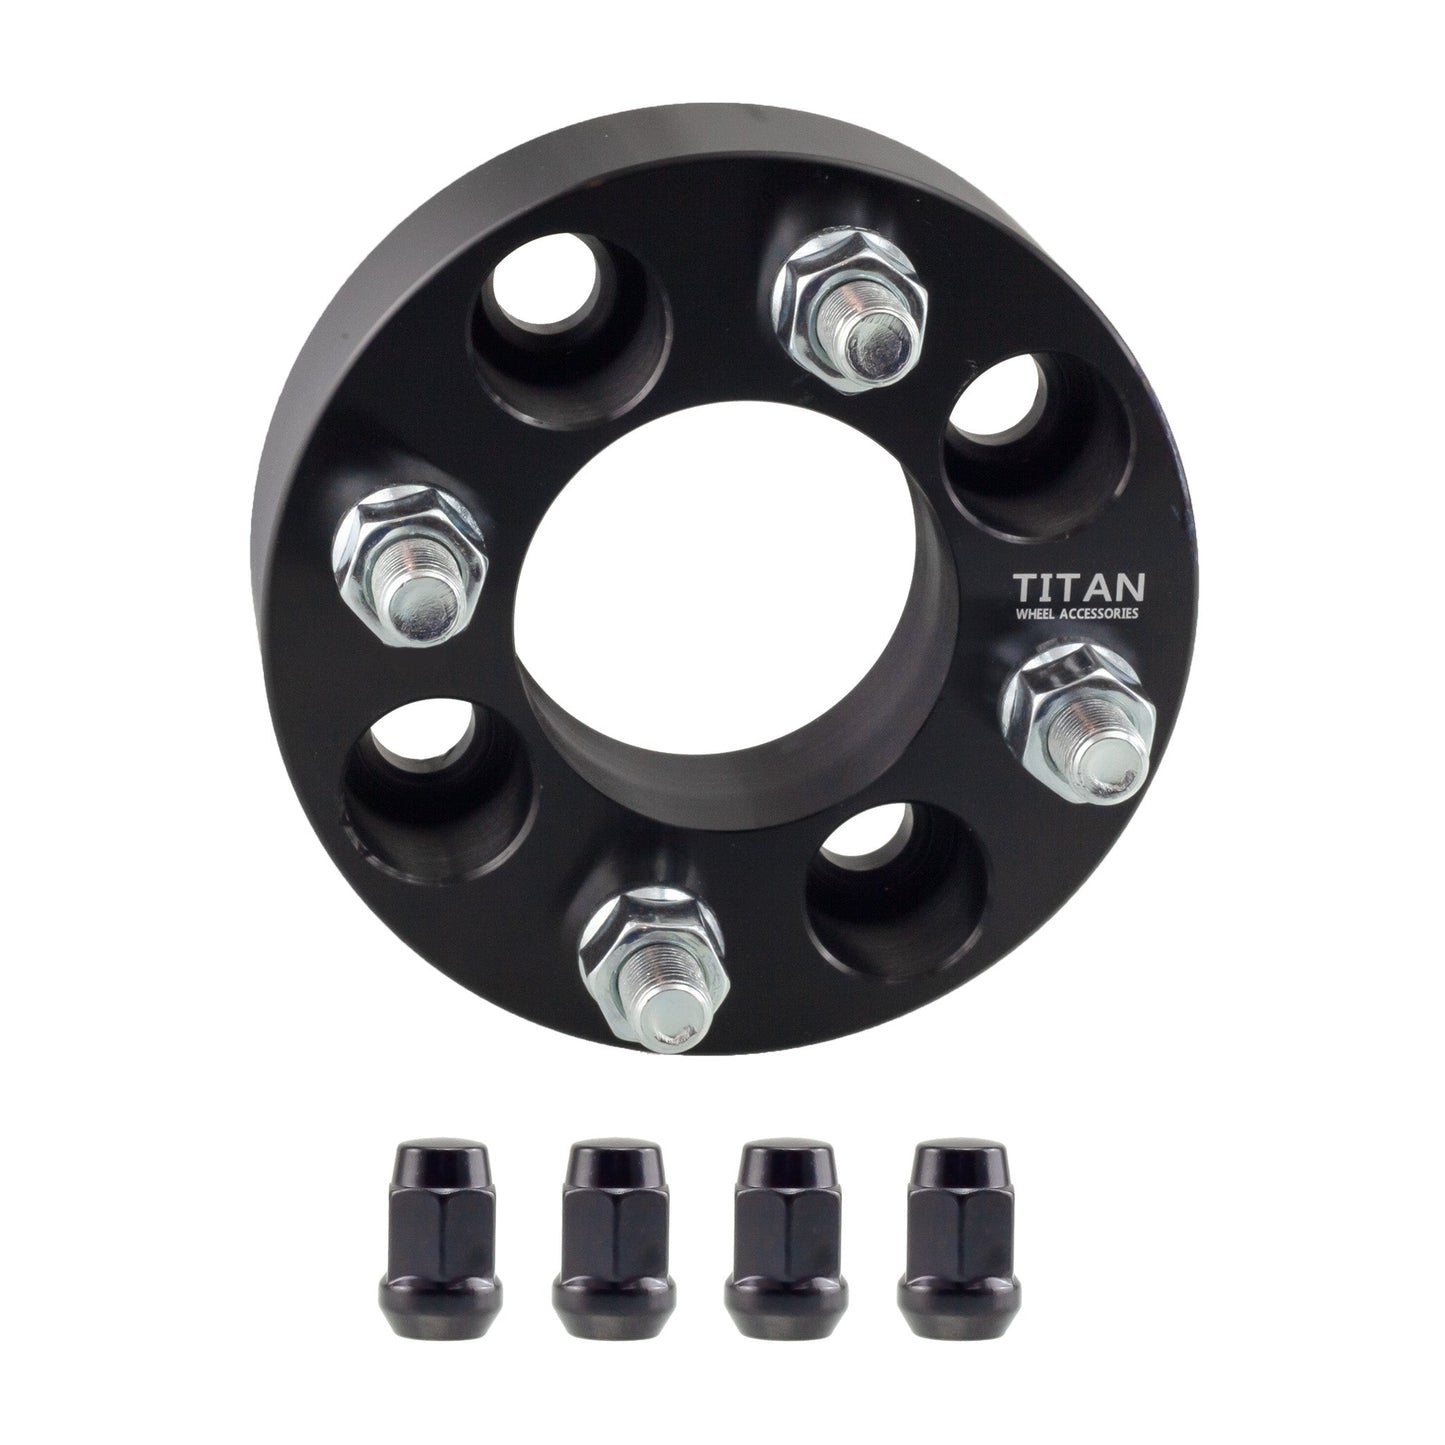 1" (25mm) Titan 4x100 to 4x114.3 Wheel Adapters for Honda Civic Acura Integram Mazda Miata | 12x1.5 Studs | | Titan Wheel Accessories